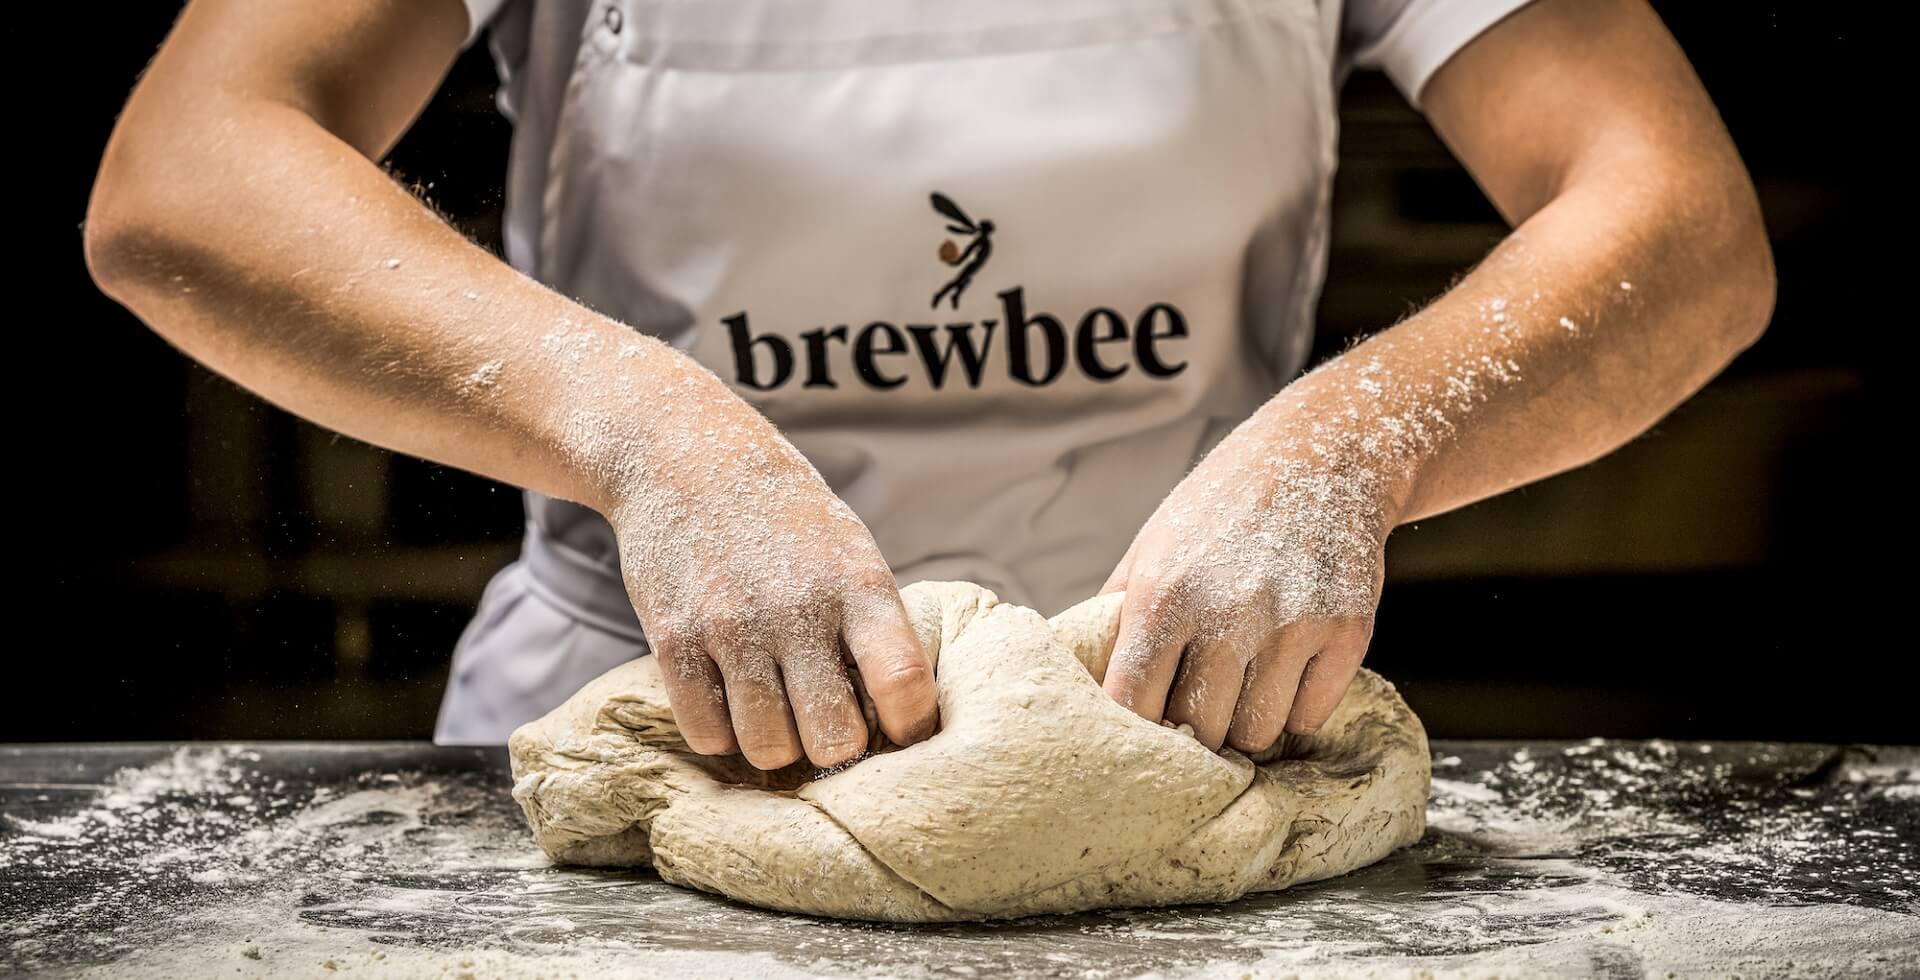 A brewbee employee kneads a pizza dough